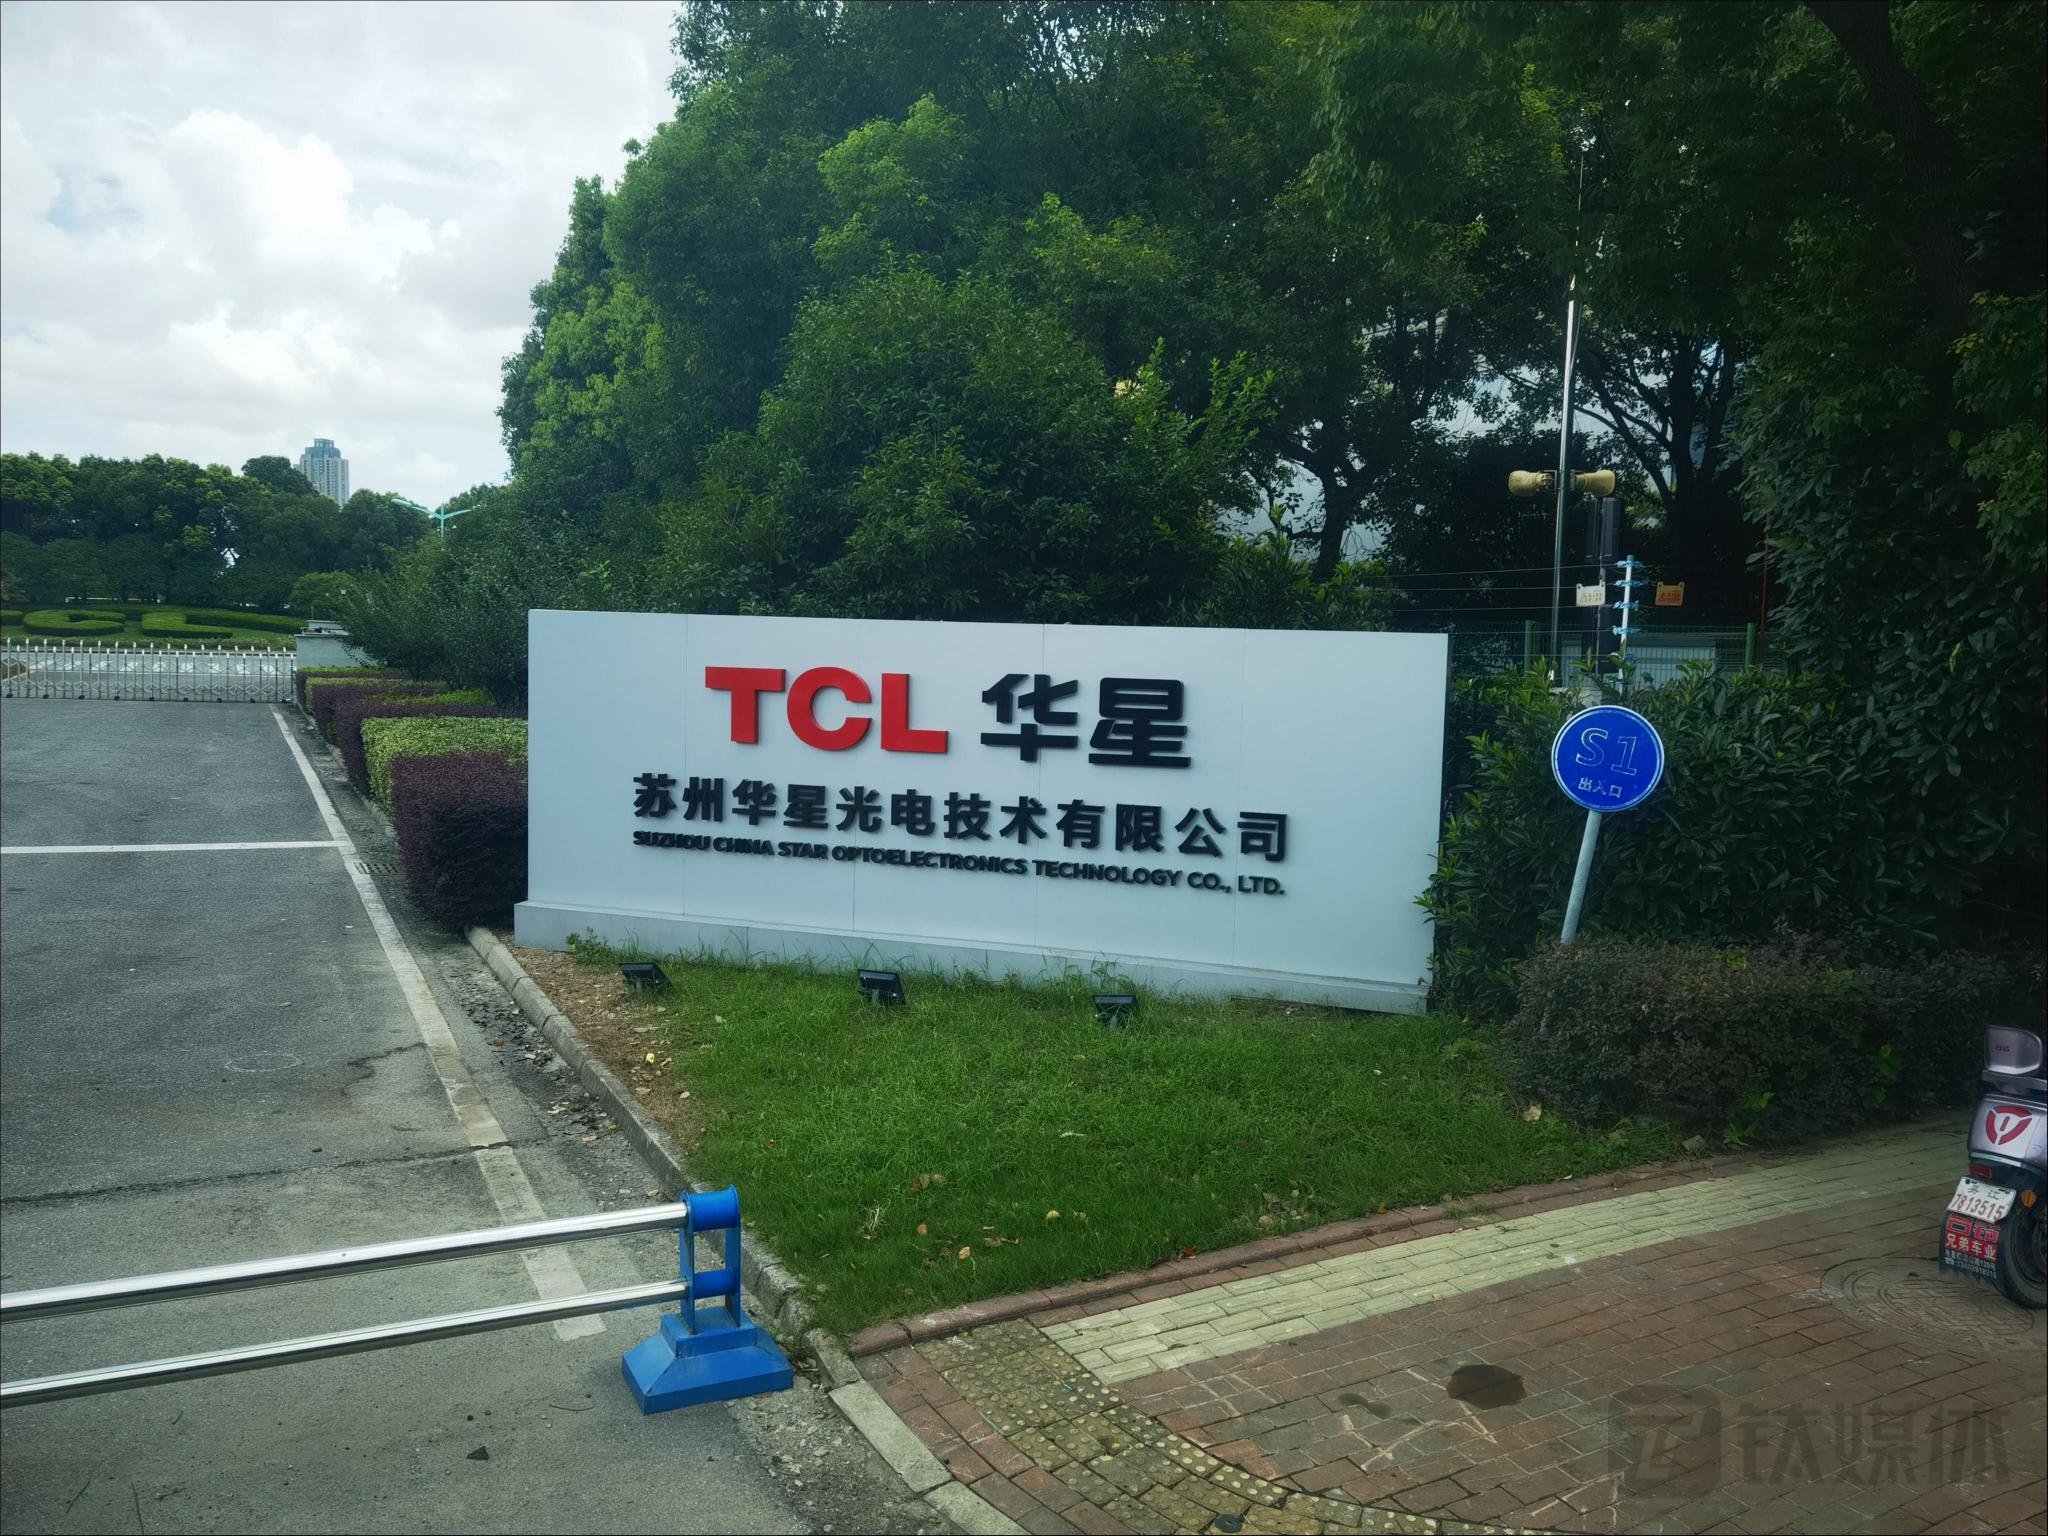 TCL华星苏州工厂，钛媒体App拍摄